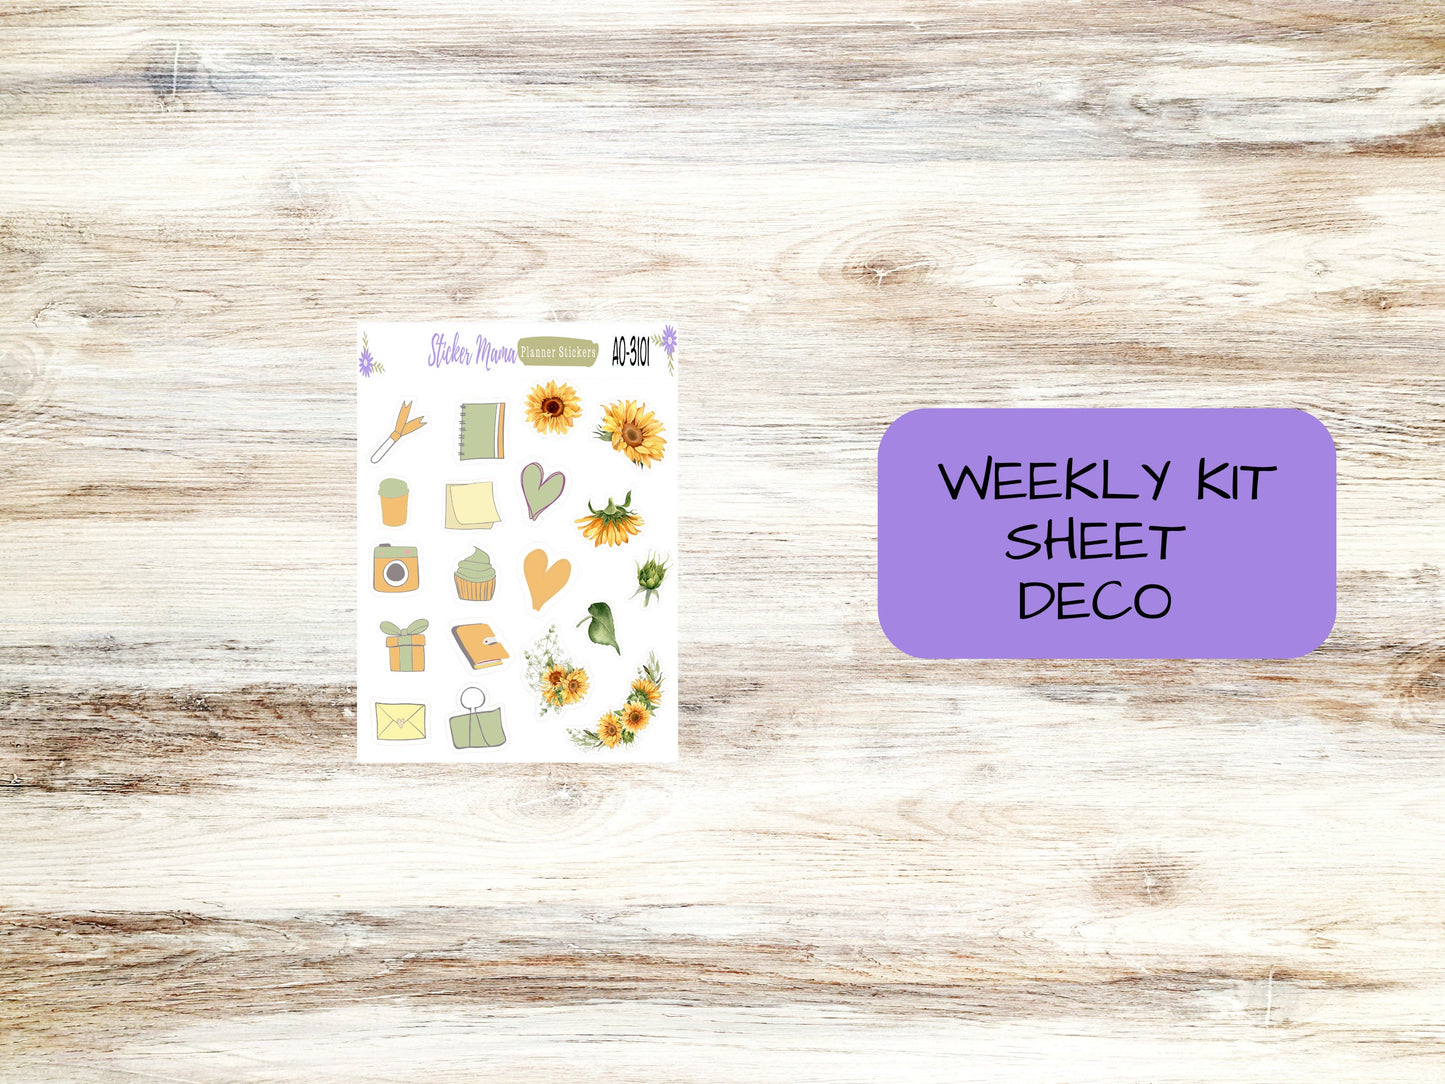 WEEKLY KIT- 3101 - Blooming Sunflowers  || Weekly Planner Kit || Erin Condren || Hourly Planner Kit || Vertical Planner Kit